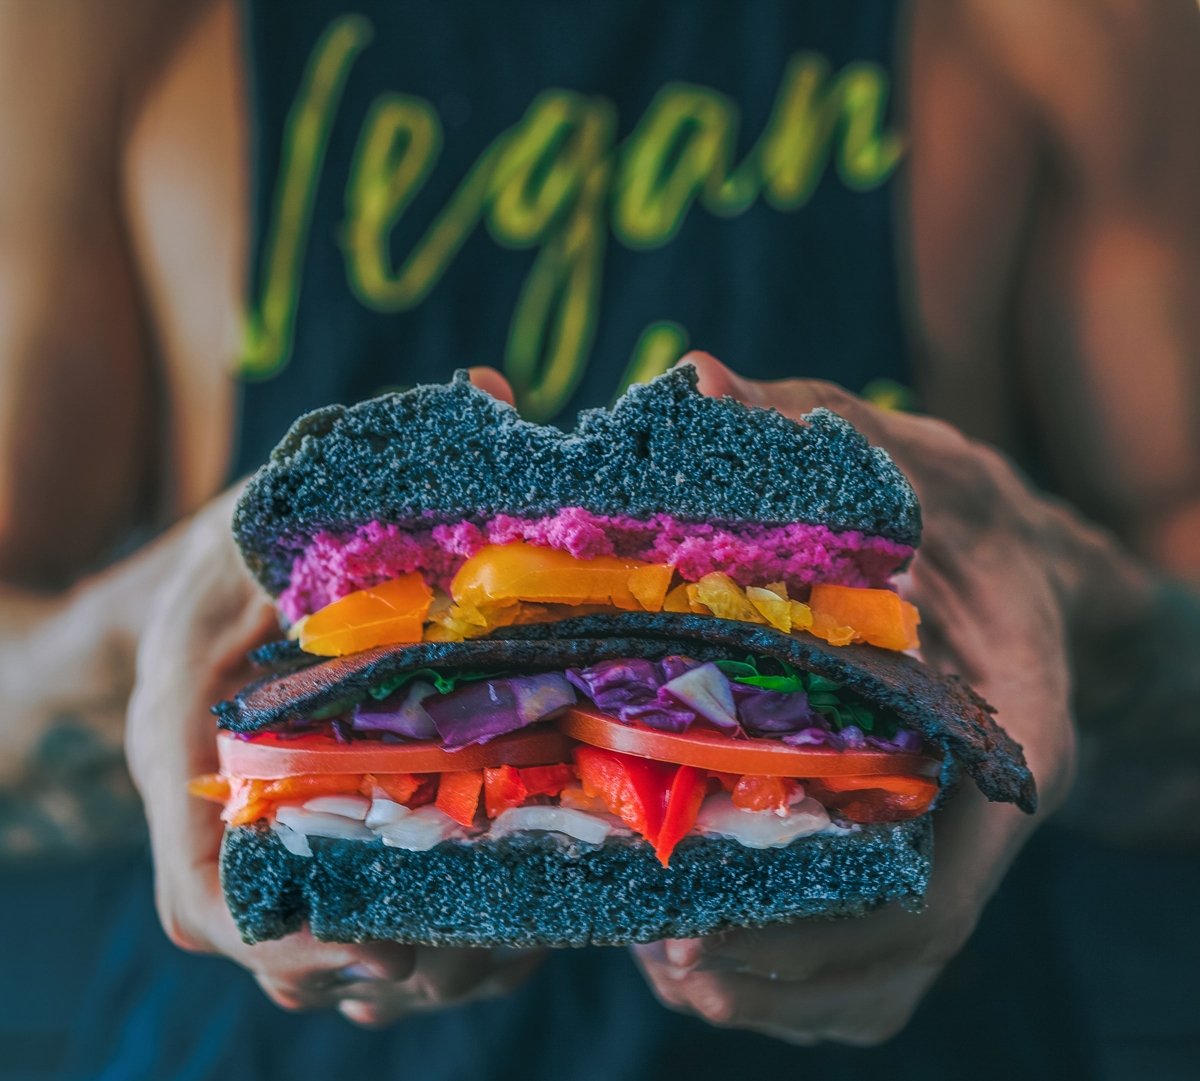 Black bread and assorted vegetables vegan sandwich